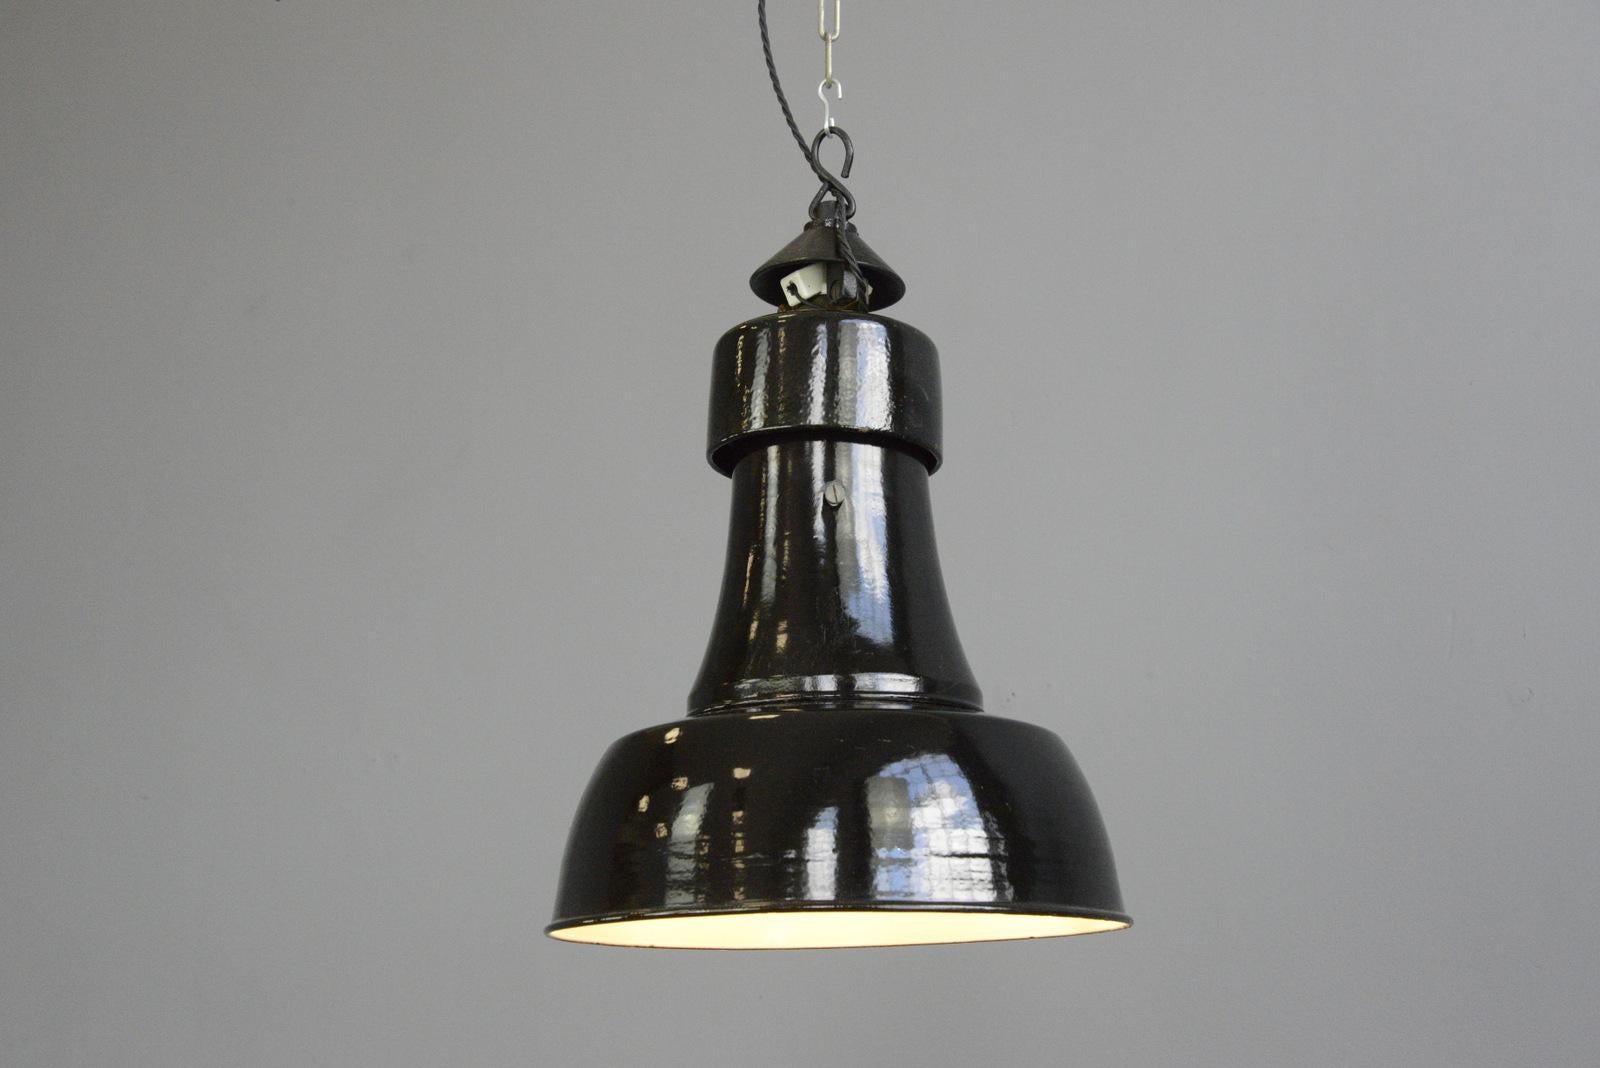 Bauhaus pendant light by Schaco, circa 1920s

- Vitreous black enamel shade
- White enamel inner reflector
- Cast iron top branded 